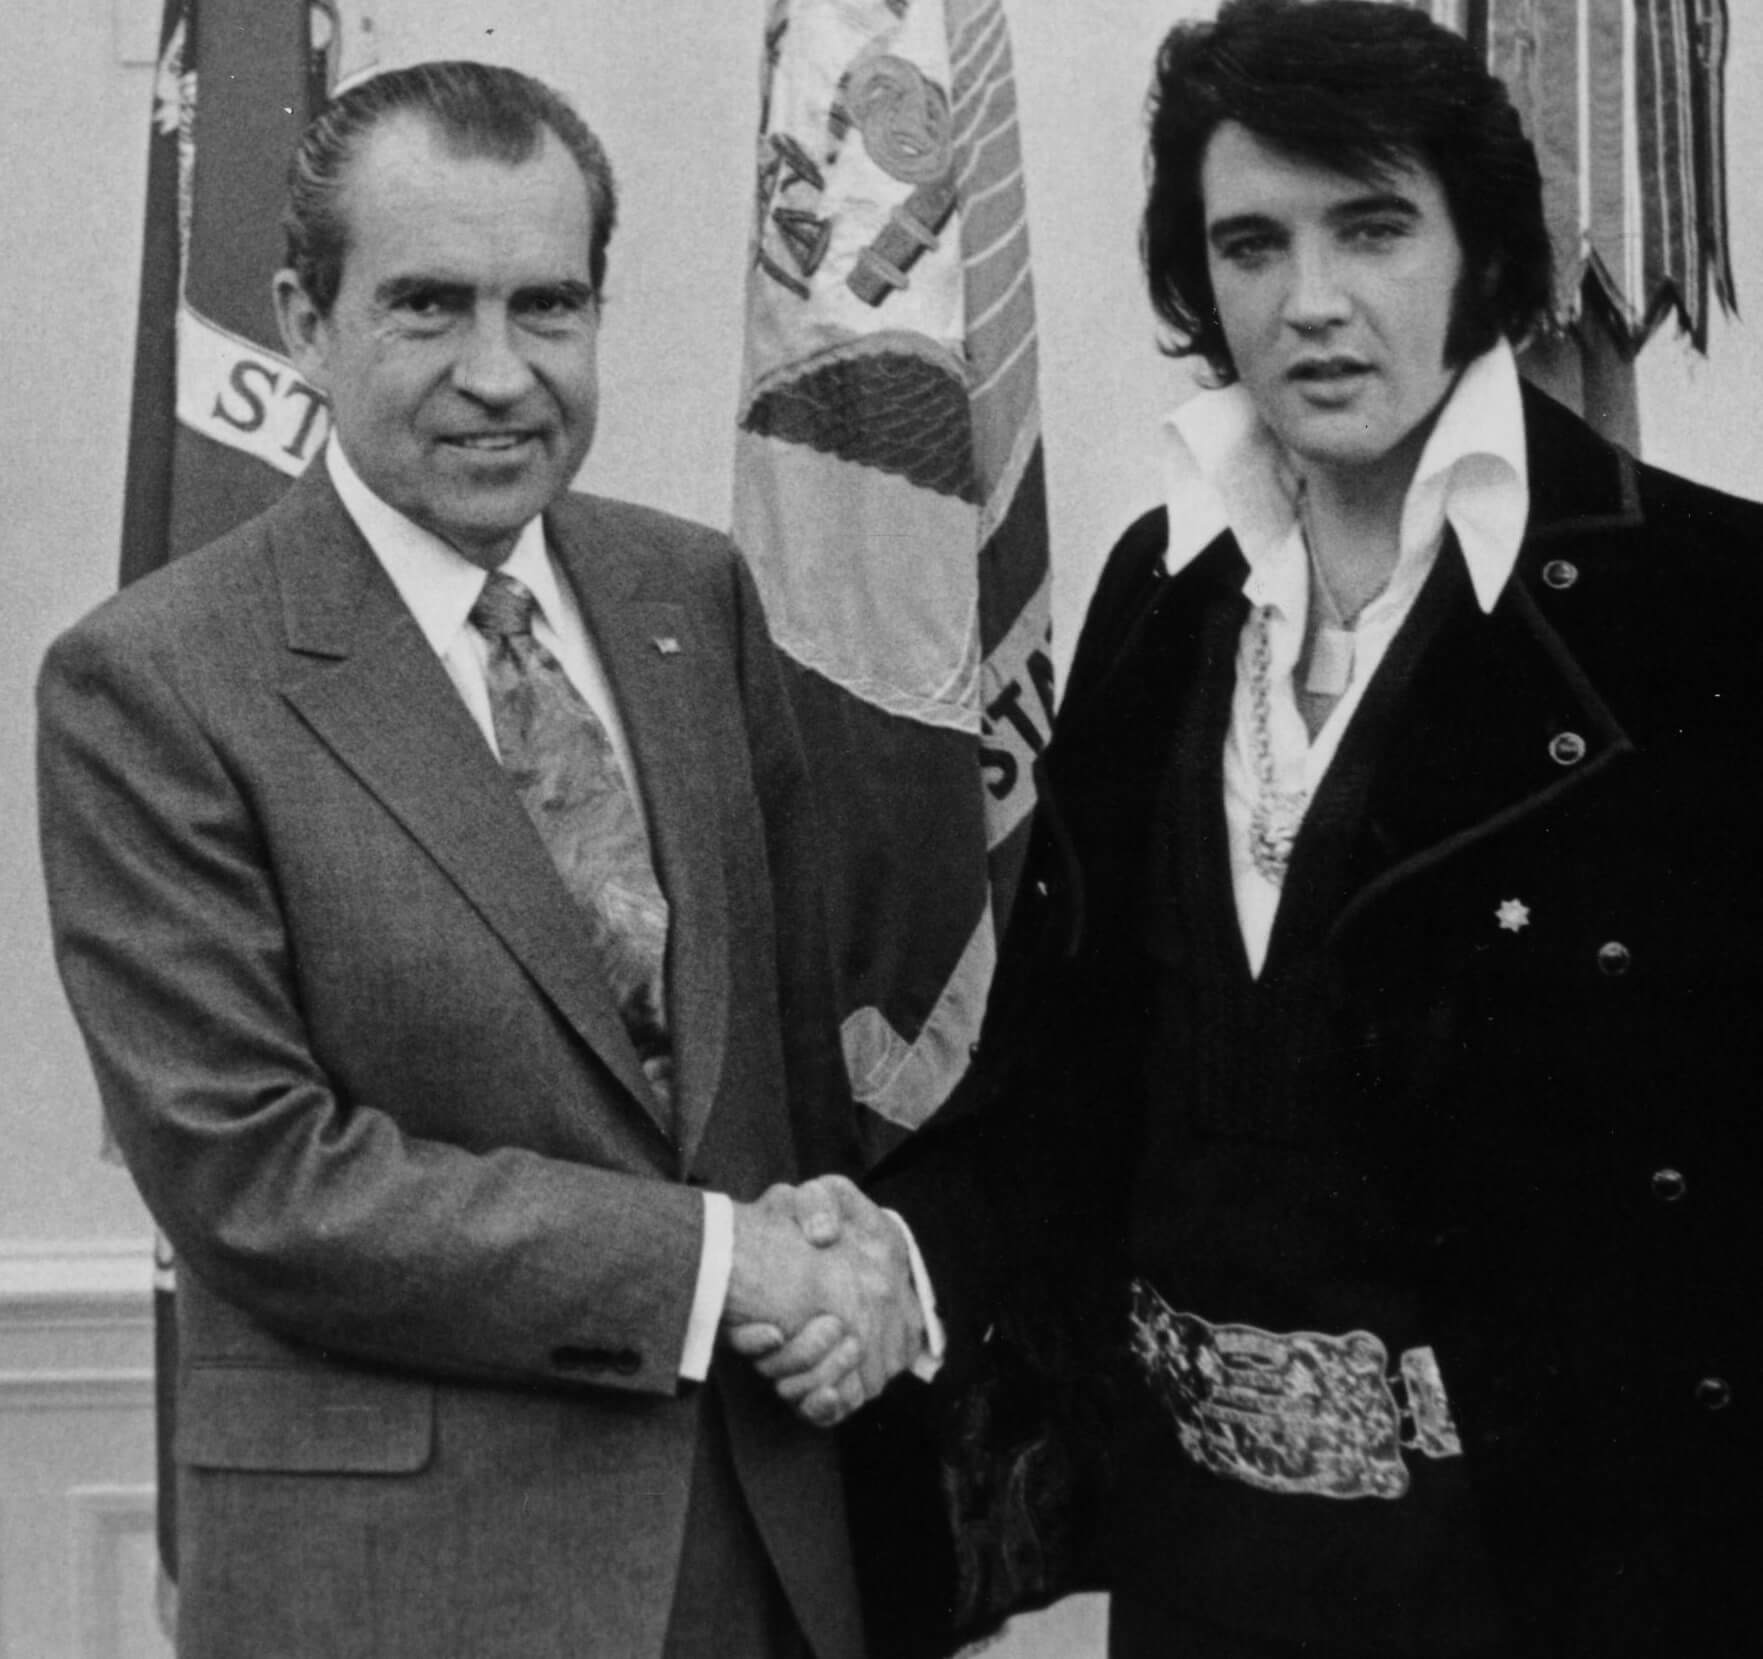 Richard Nixon and Elvis Presley shaking hands